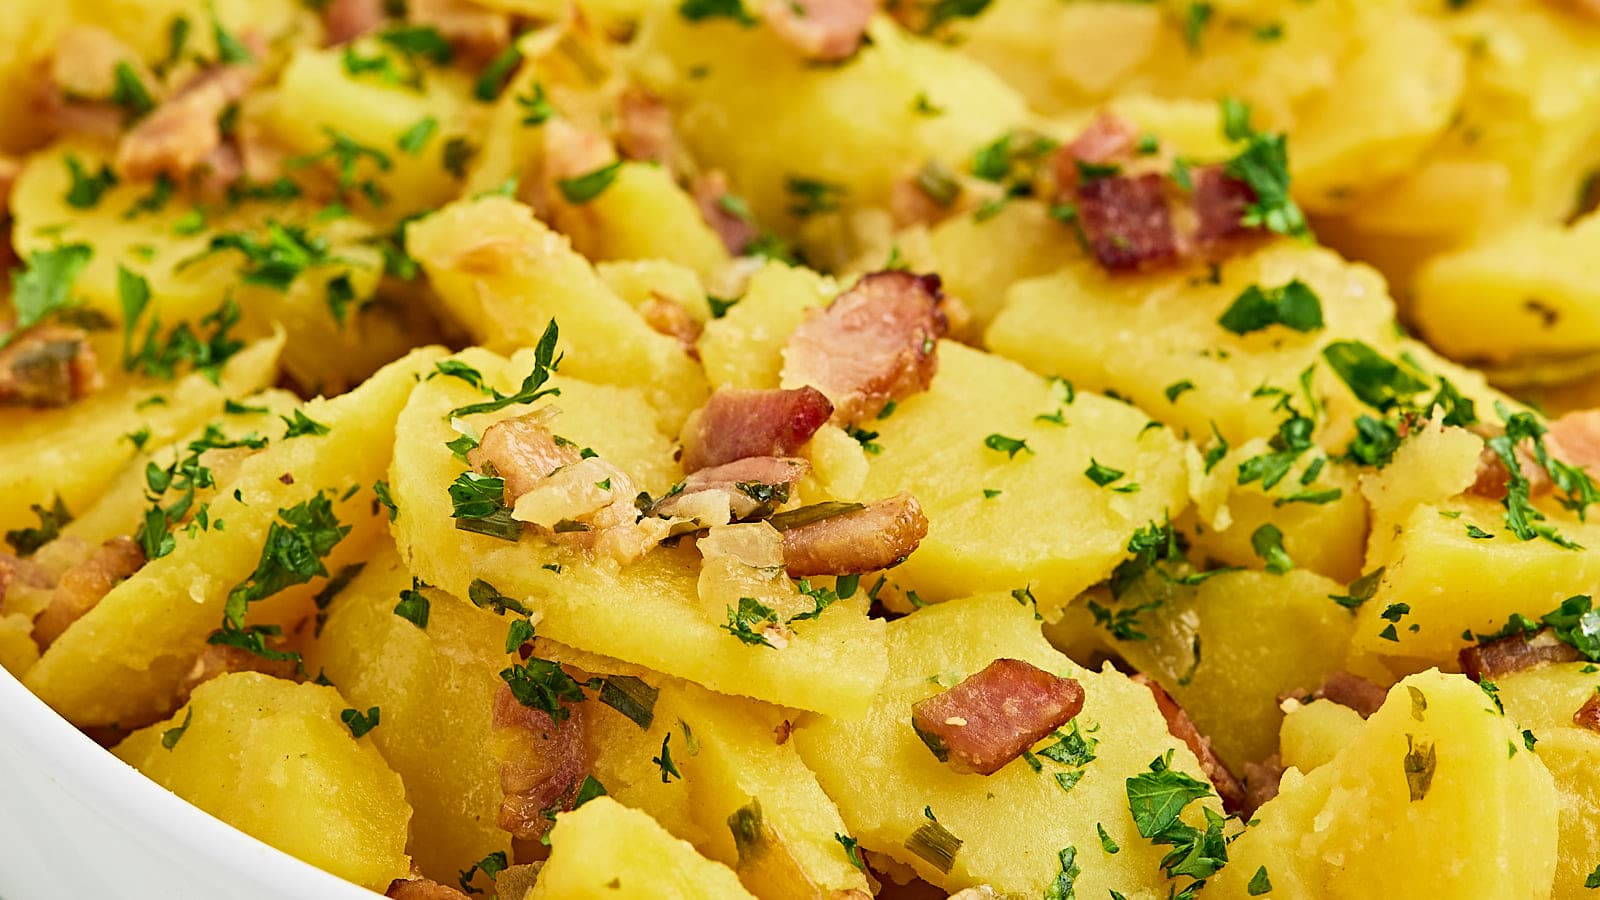 Warm German Potato Salad recipe by Cheerful Cook.com